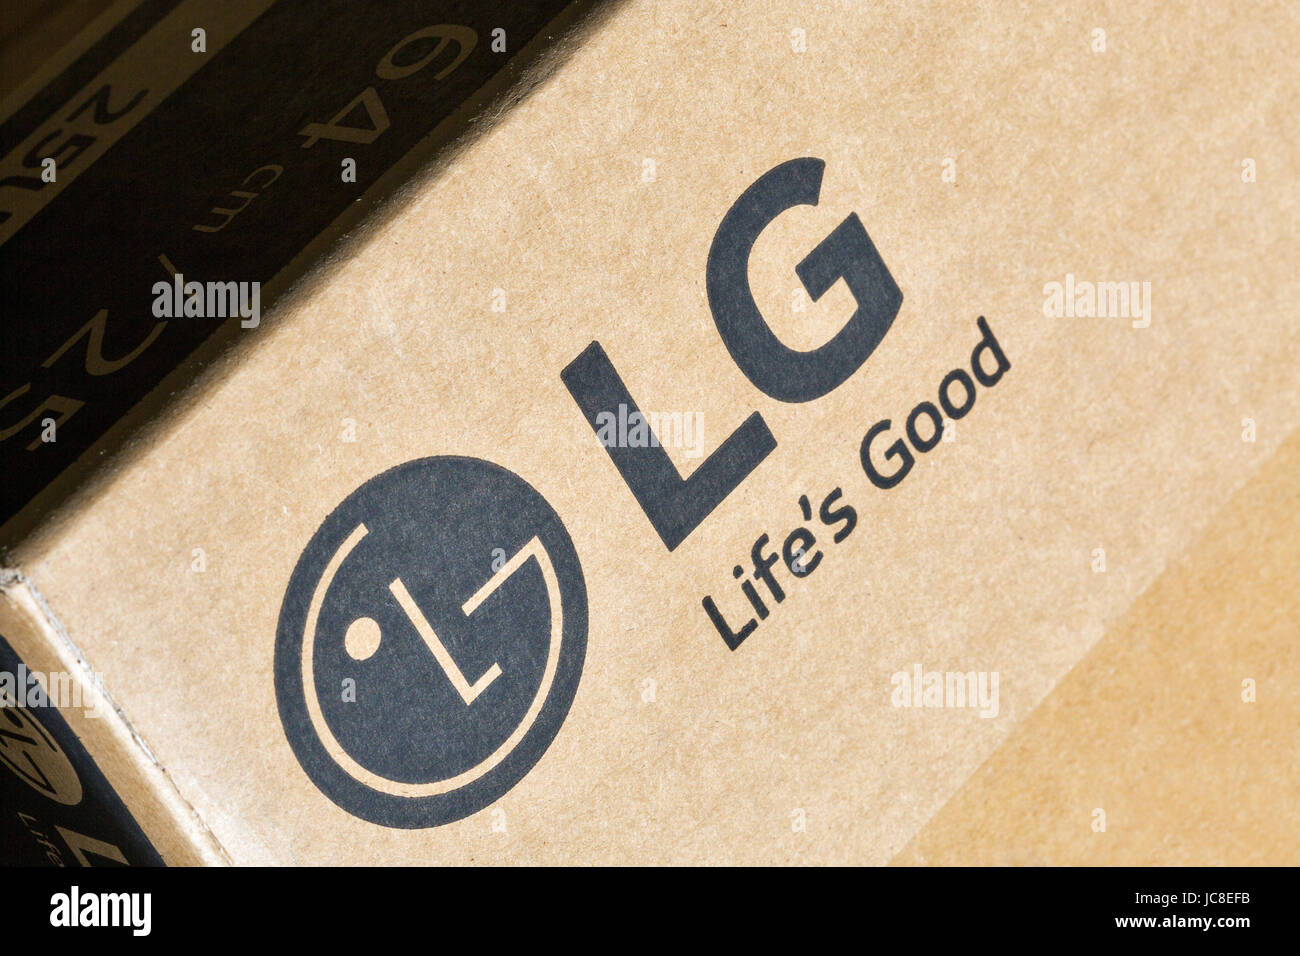 KIEV, UKRAINE - APRIL 27, 2017: LG company logo on display carton box closeup. LG is a South Korean multinational conglomerate corporation. Stock Photo